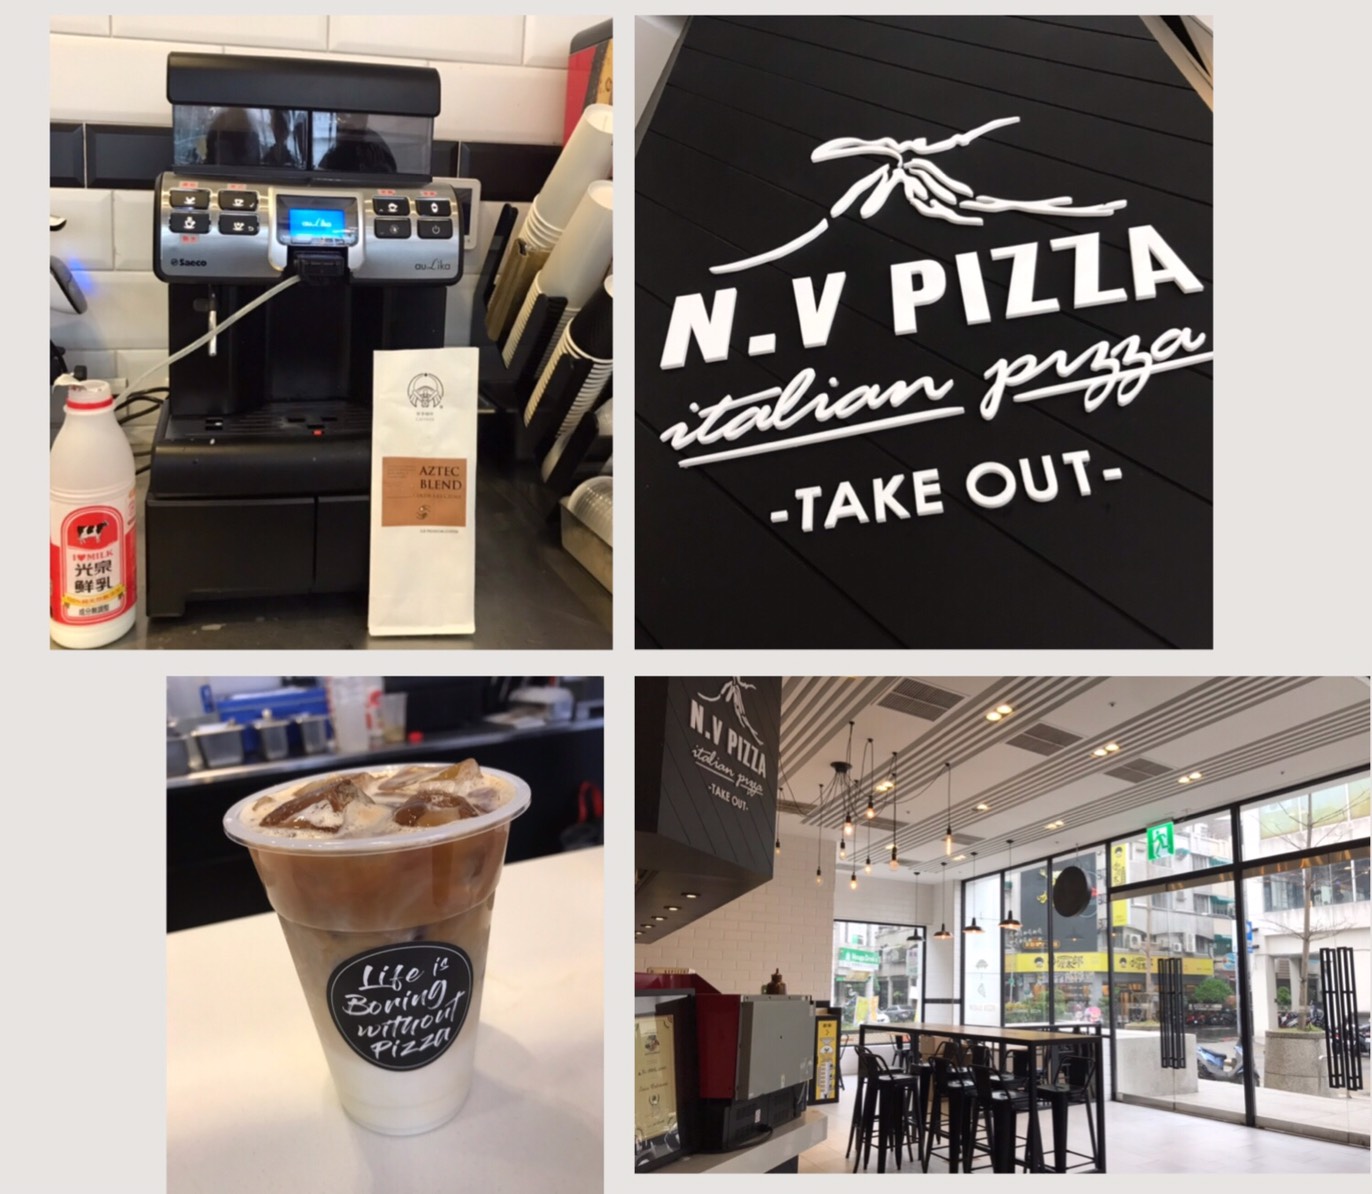 NVpizza 全自動咖啡機 Saeco Aulika HSC 適合西式快餐店 早午餐 飲料店